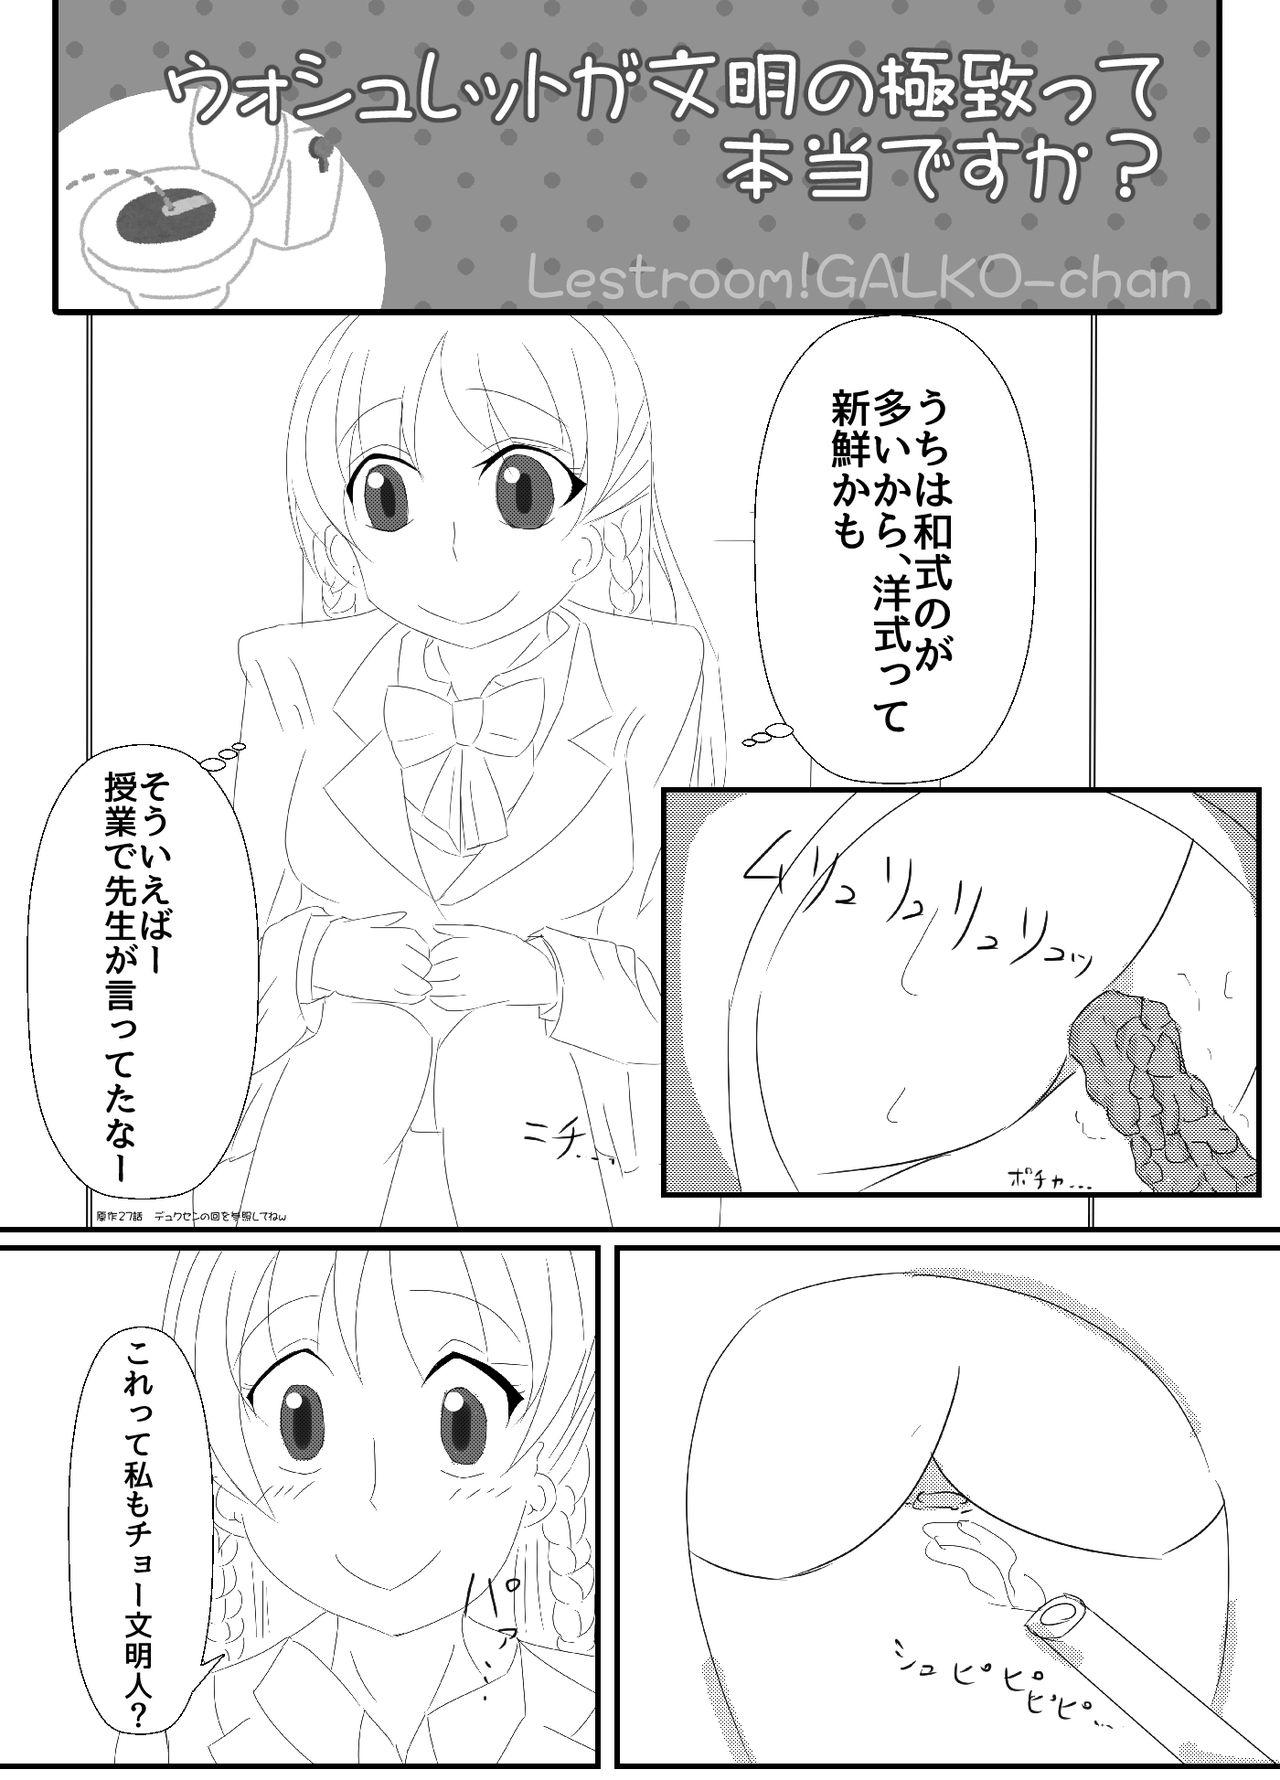 Blackdick Otoile! Galko-chan - Oshiete galko-chan Tits - Page 8